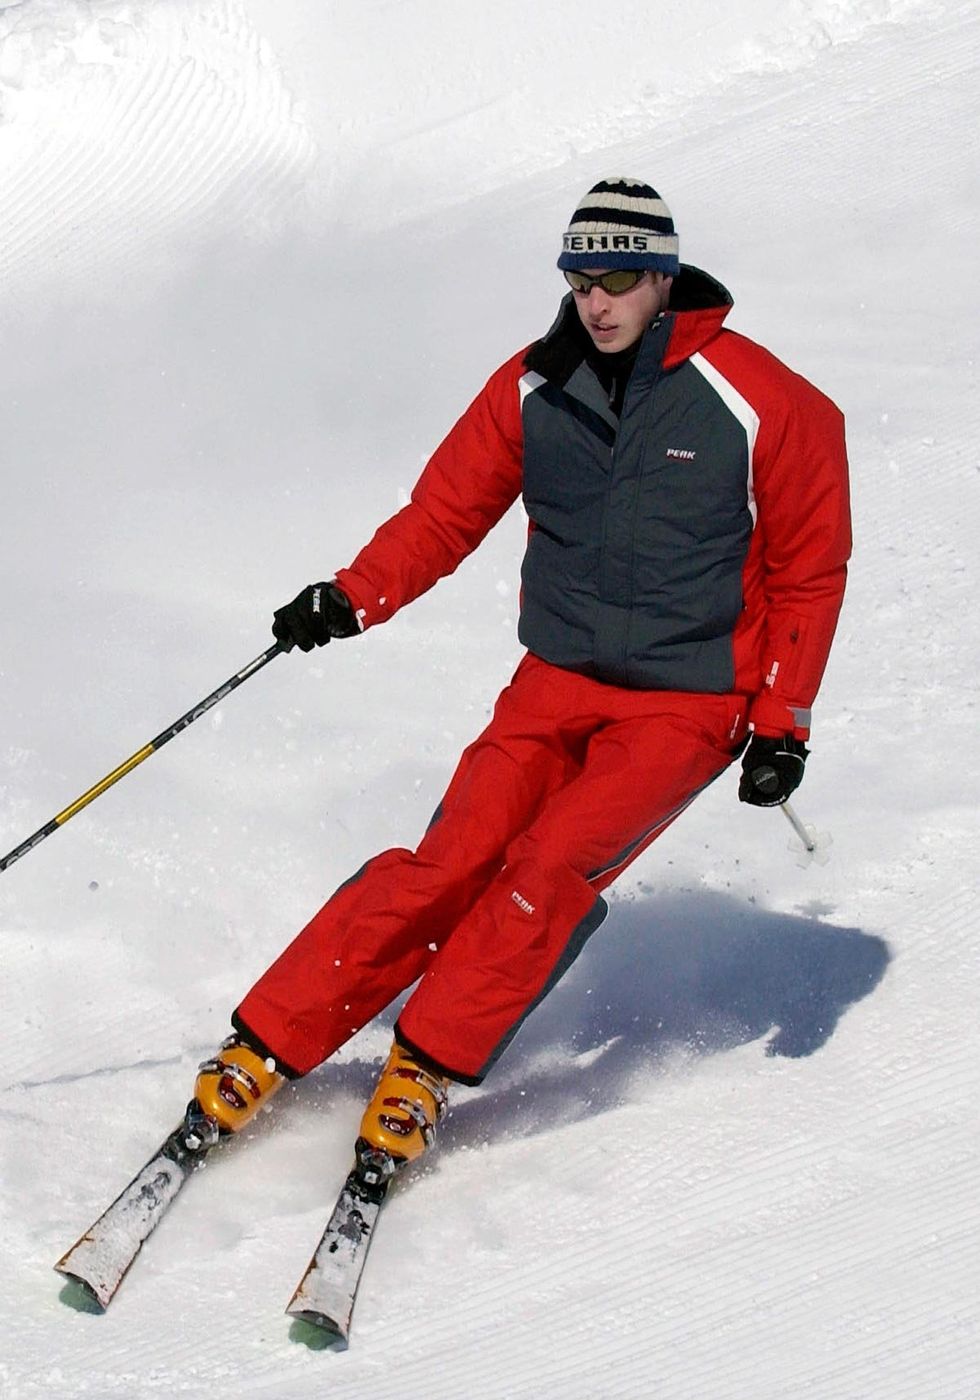 skier, ski, ski boot, ski pole, skiing, ski equipment, ski binding, telemark skiing, freestyle skiing, alpine skiing,